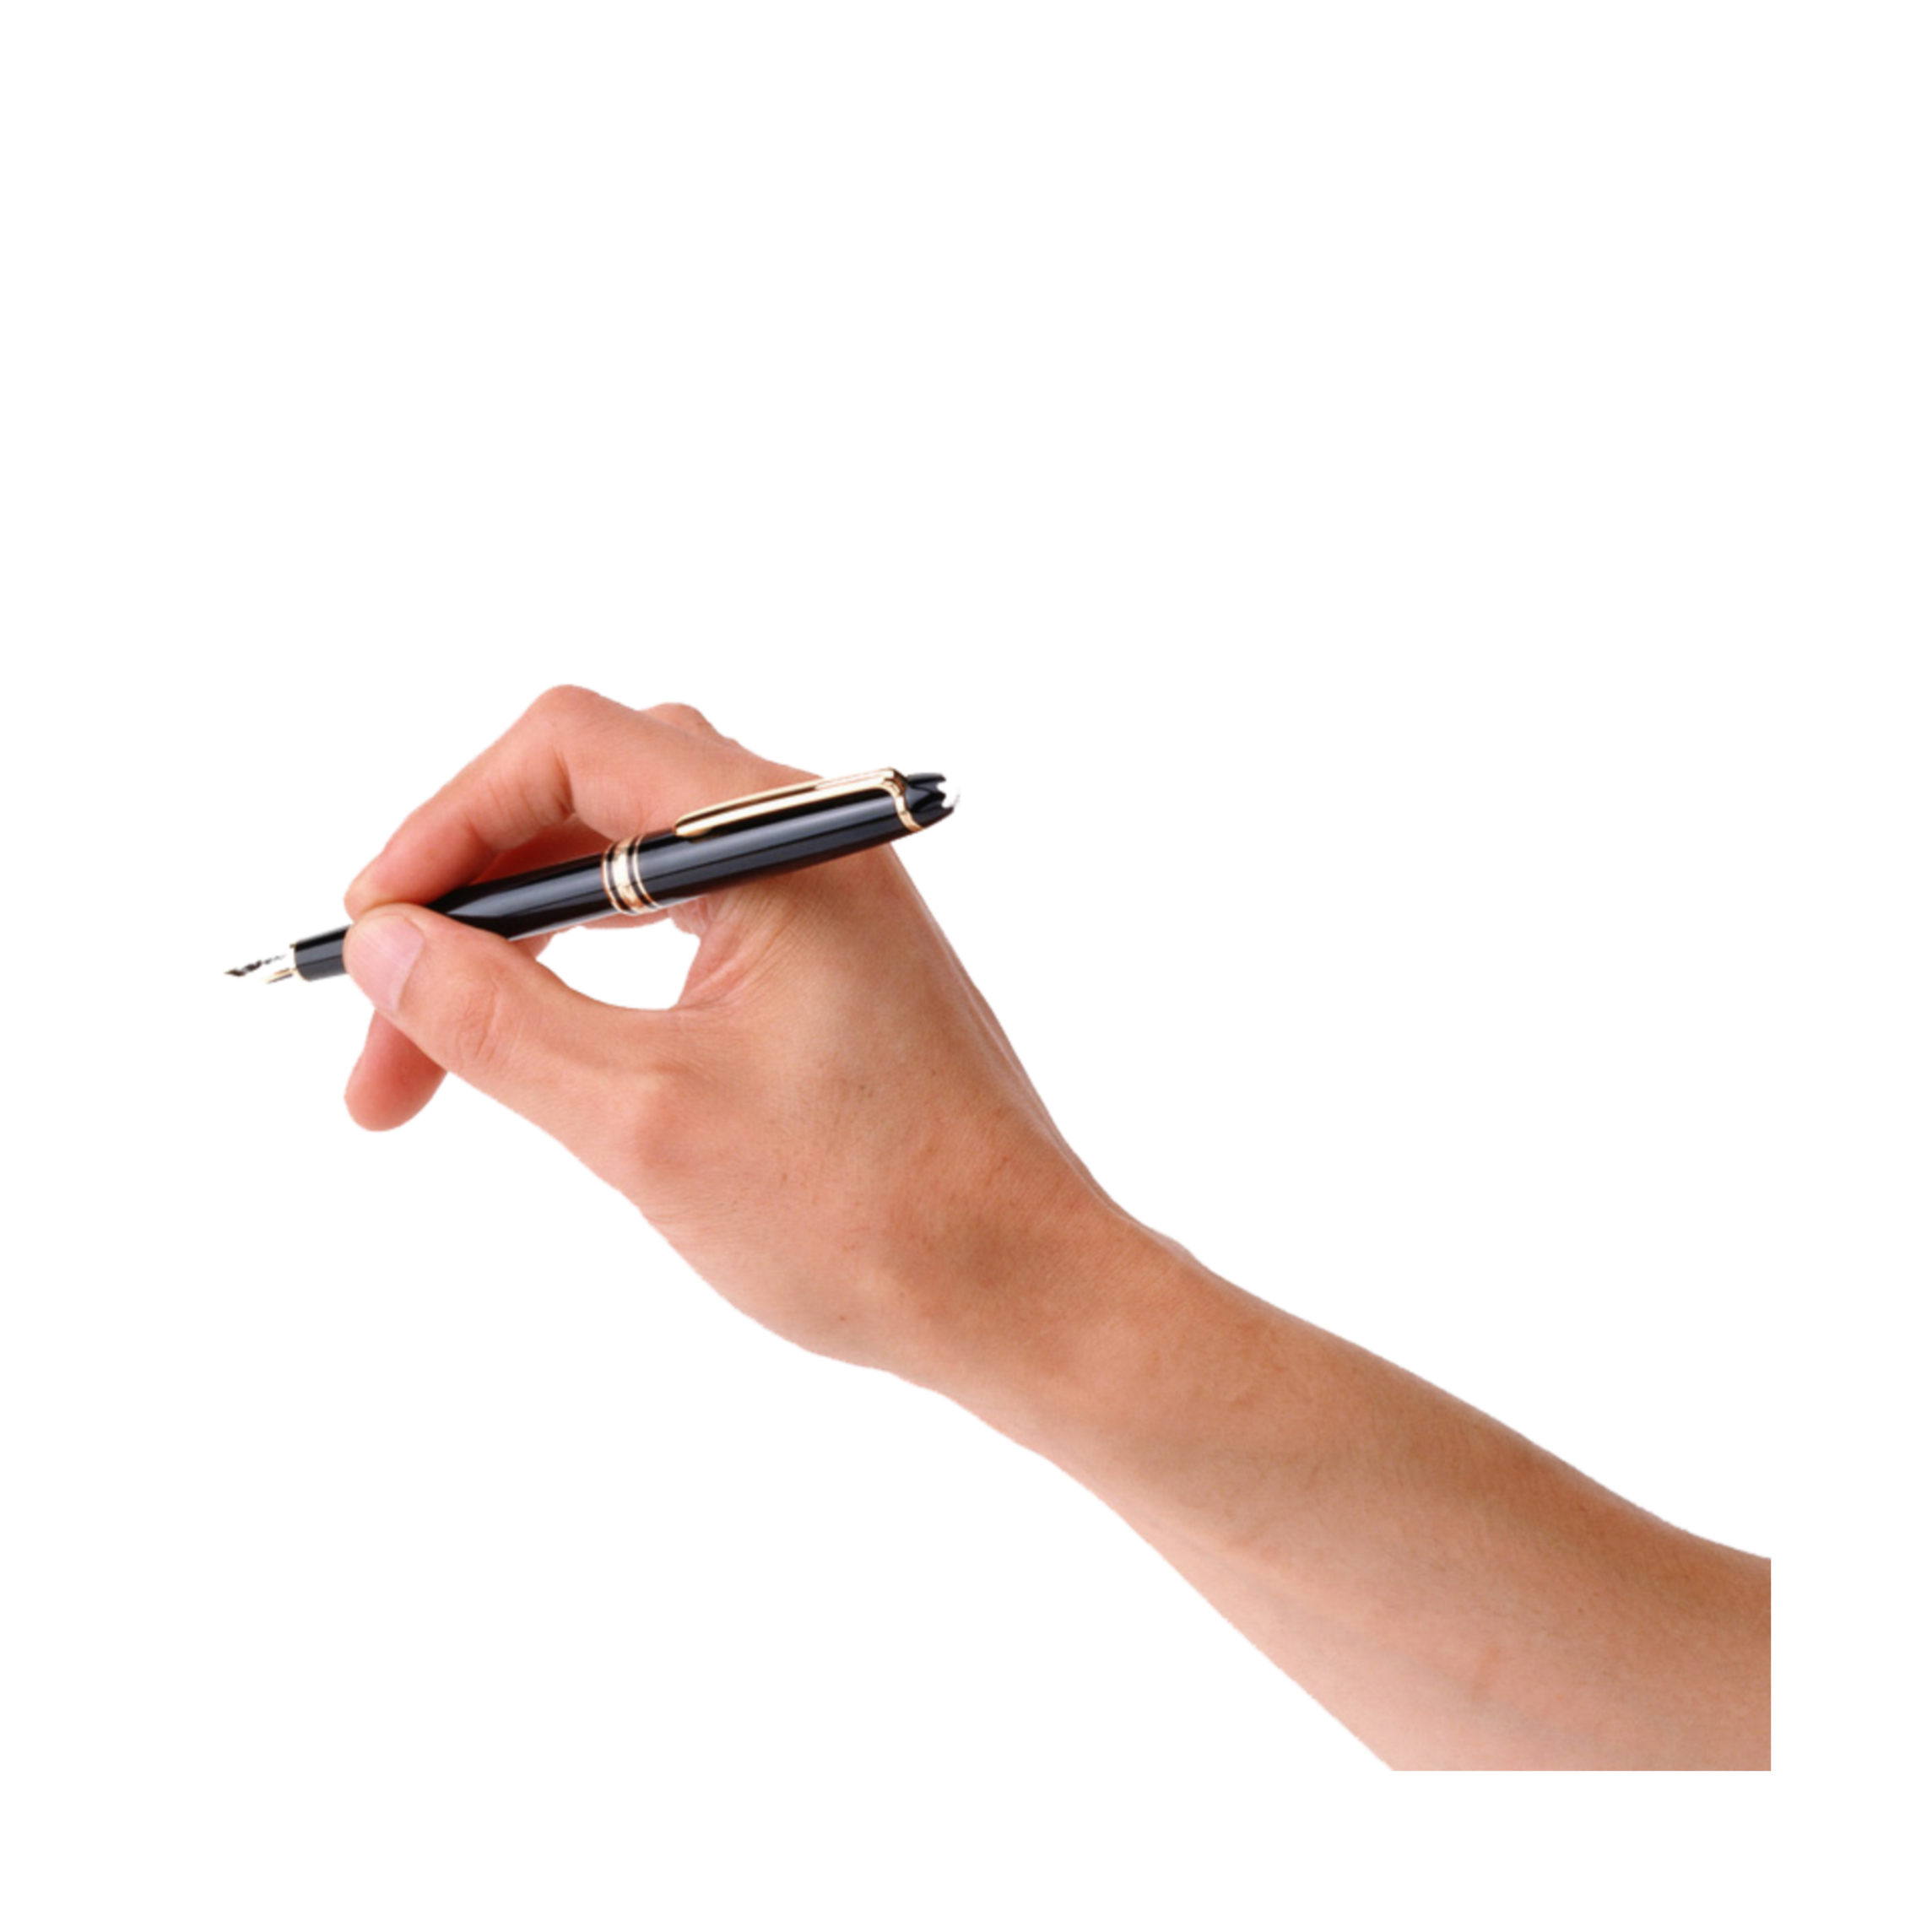 Take a pen. Рука с ручкой. Рука с ручкой без фона. Пишущая рука. Женская рука с ручкой.